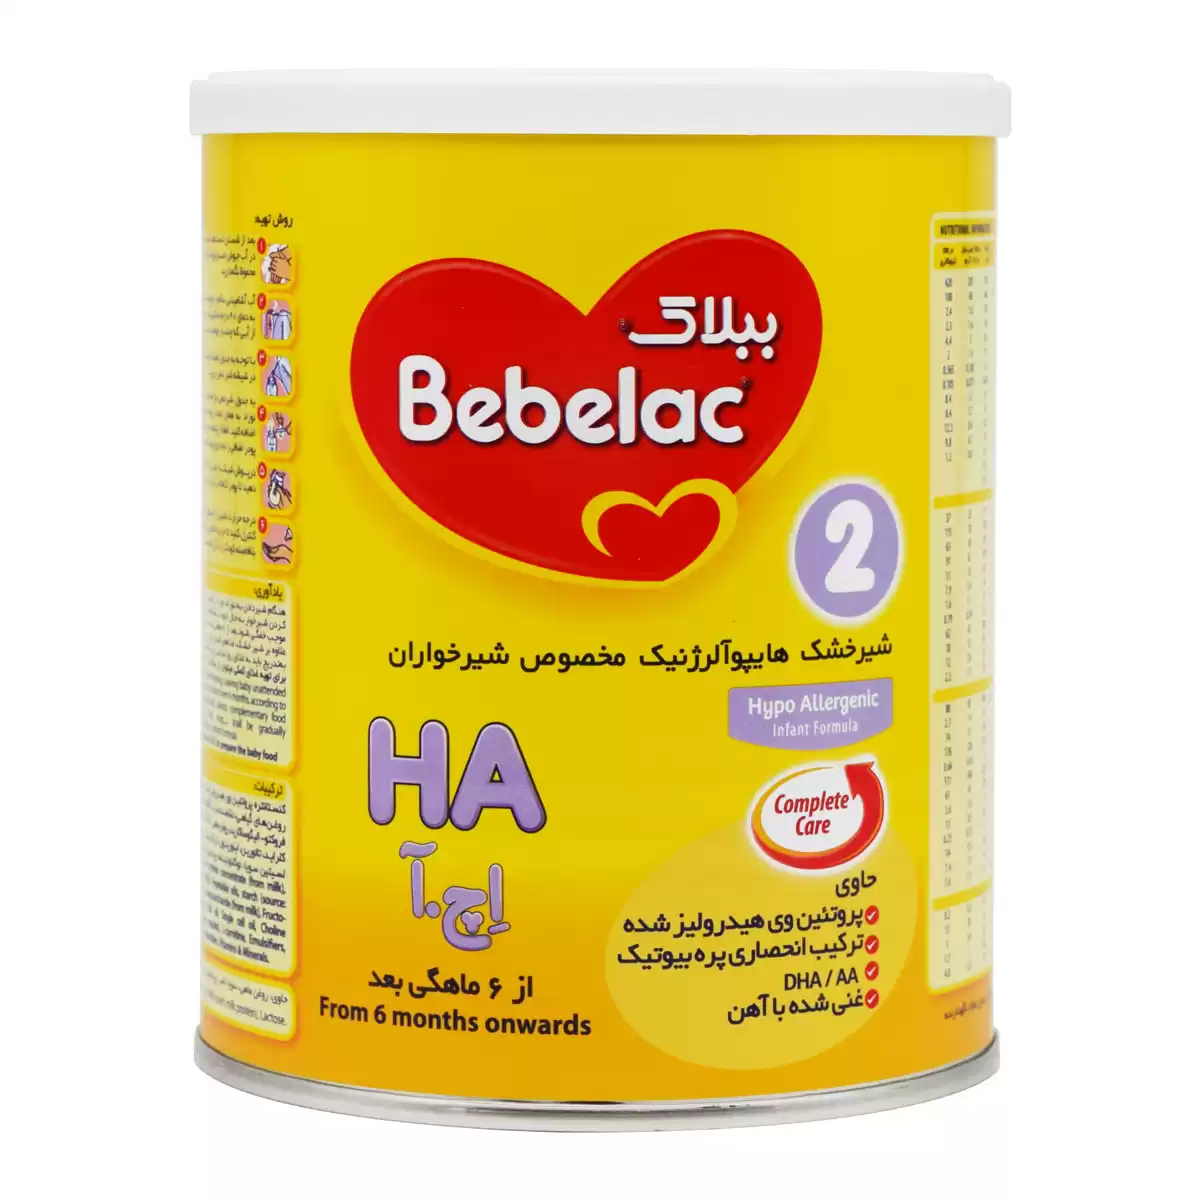 شیر خشک ببلاک اچ آ ۲ میلوپا | BEBELAC MILUPA HA 2